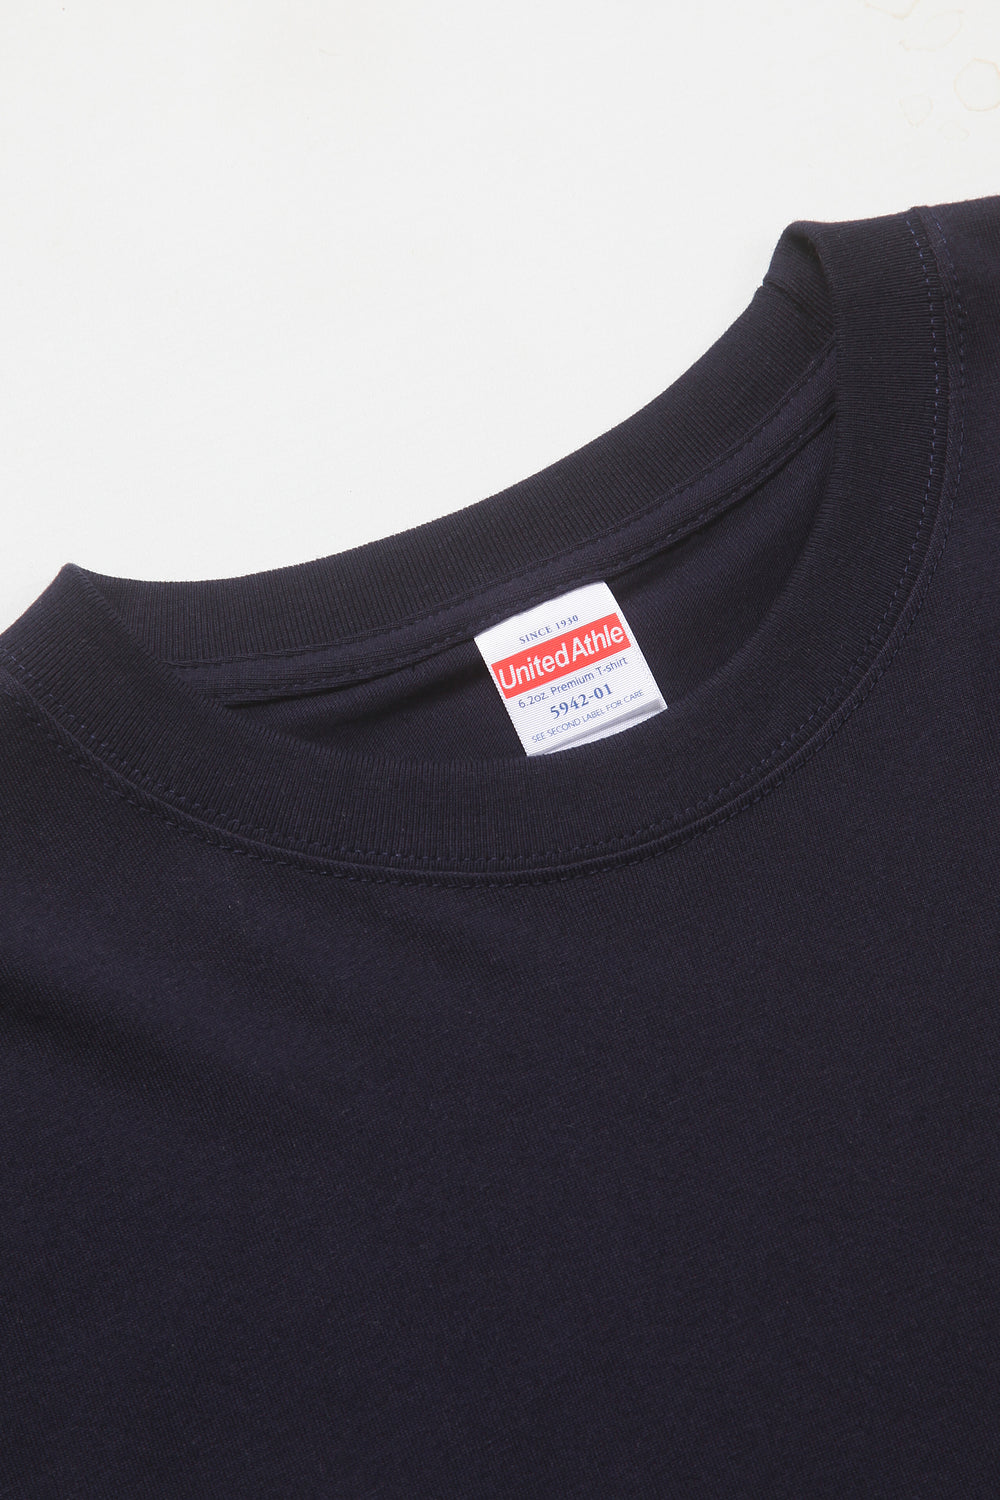 United Athle - 5942 6.2oz Premium T-Shirt - Navy – Blacksmith Store